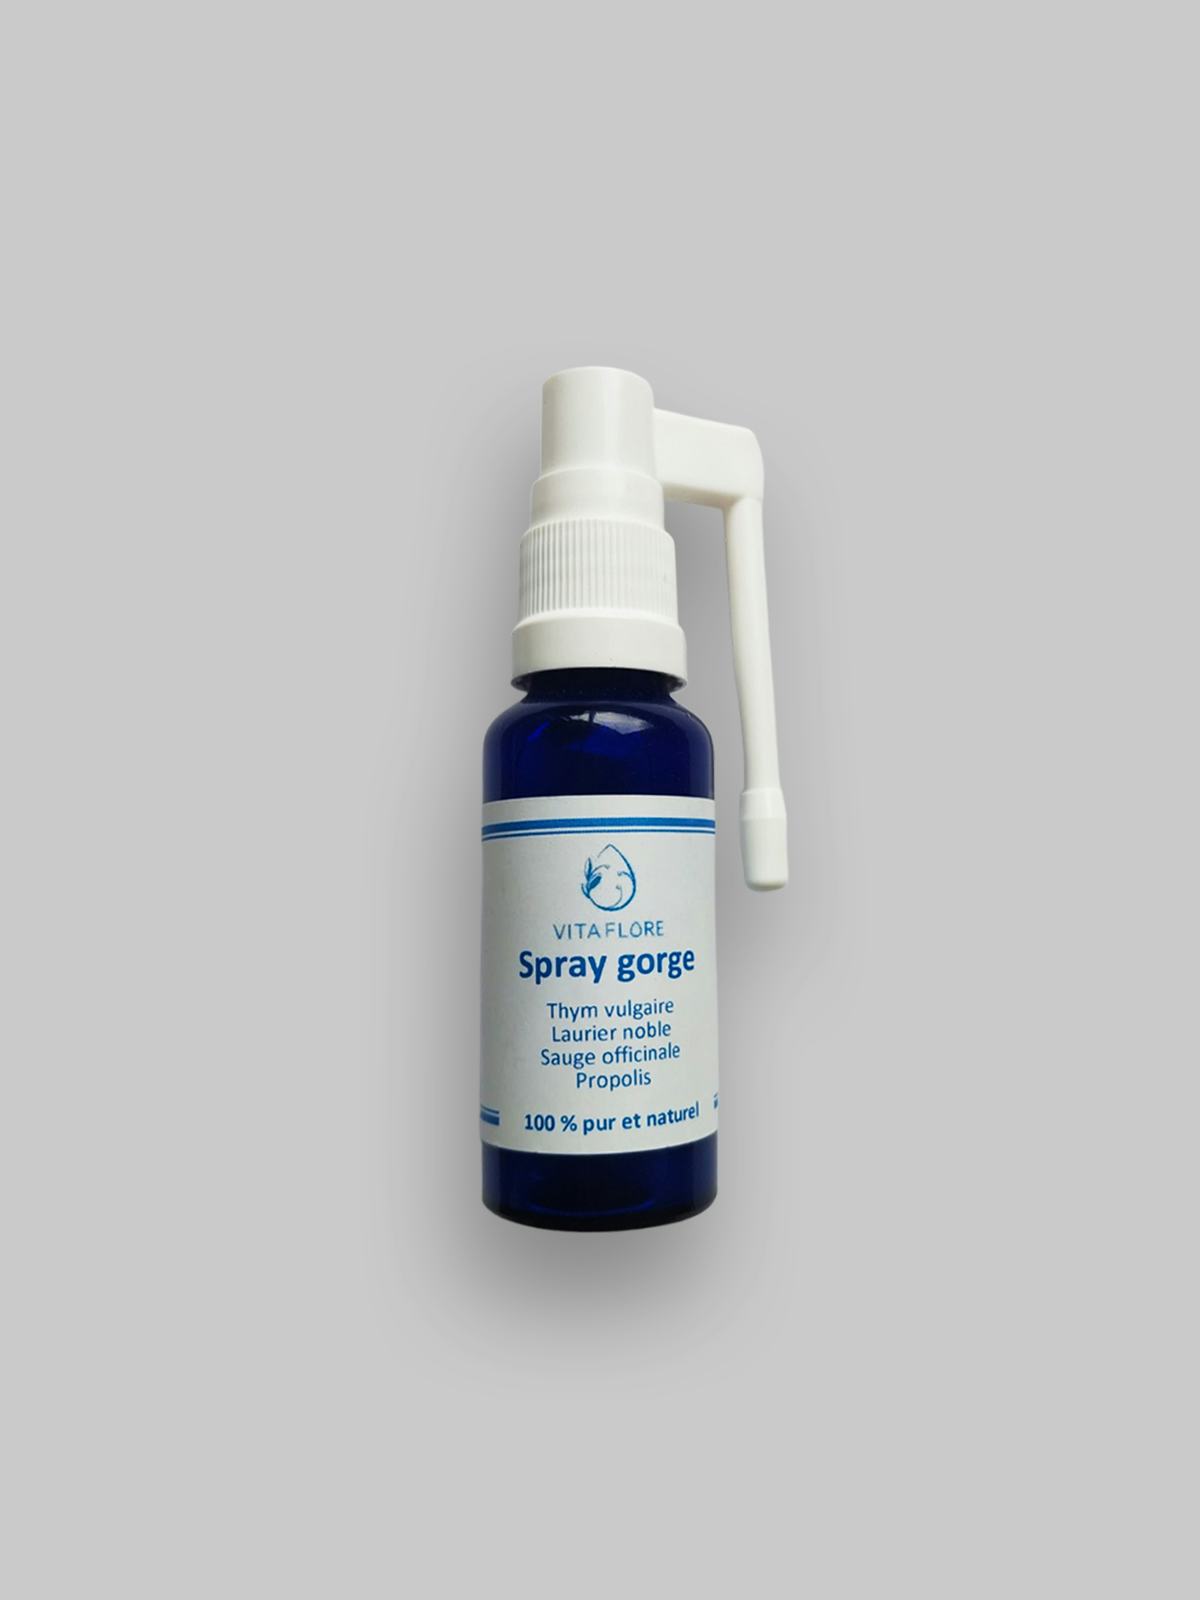 Spray gorge, produit artisanal en vente directe en Suisse